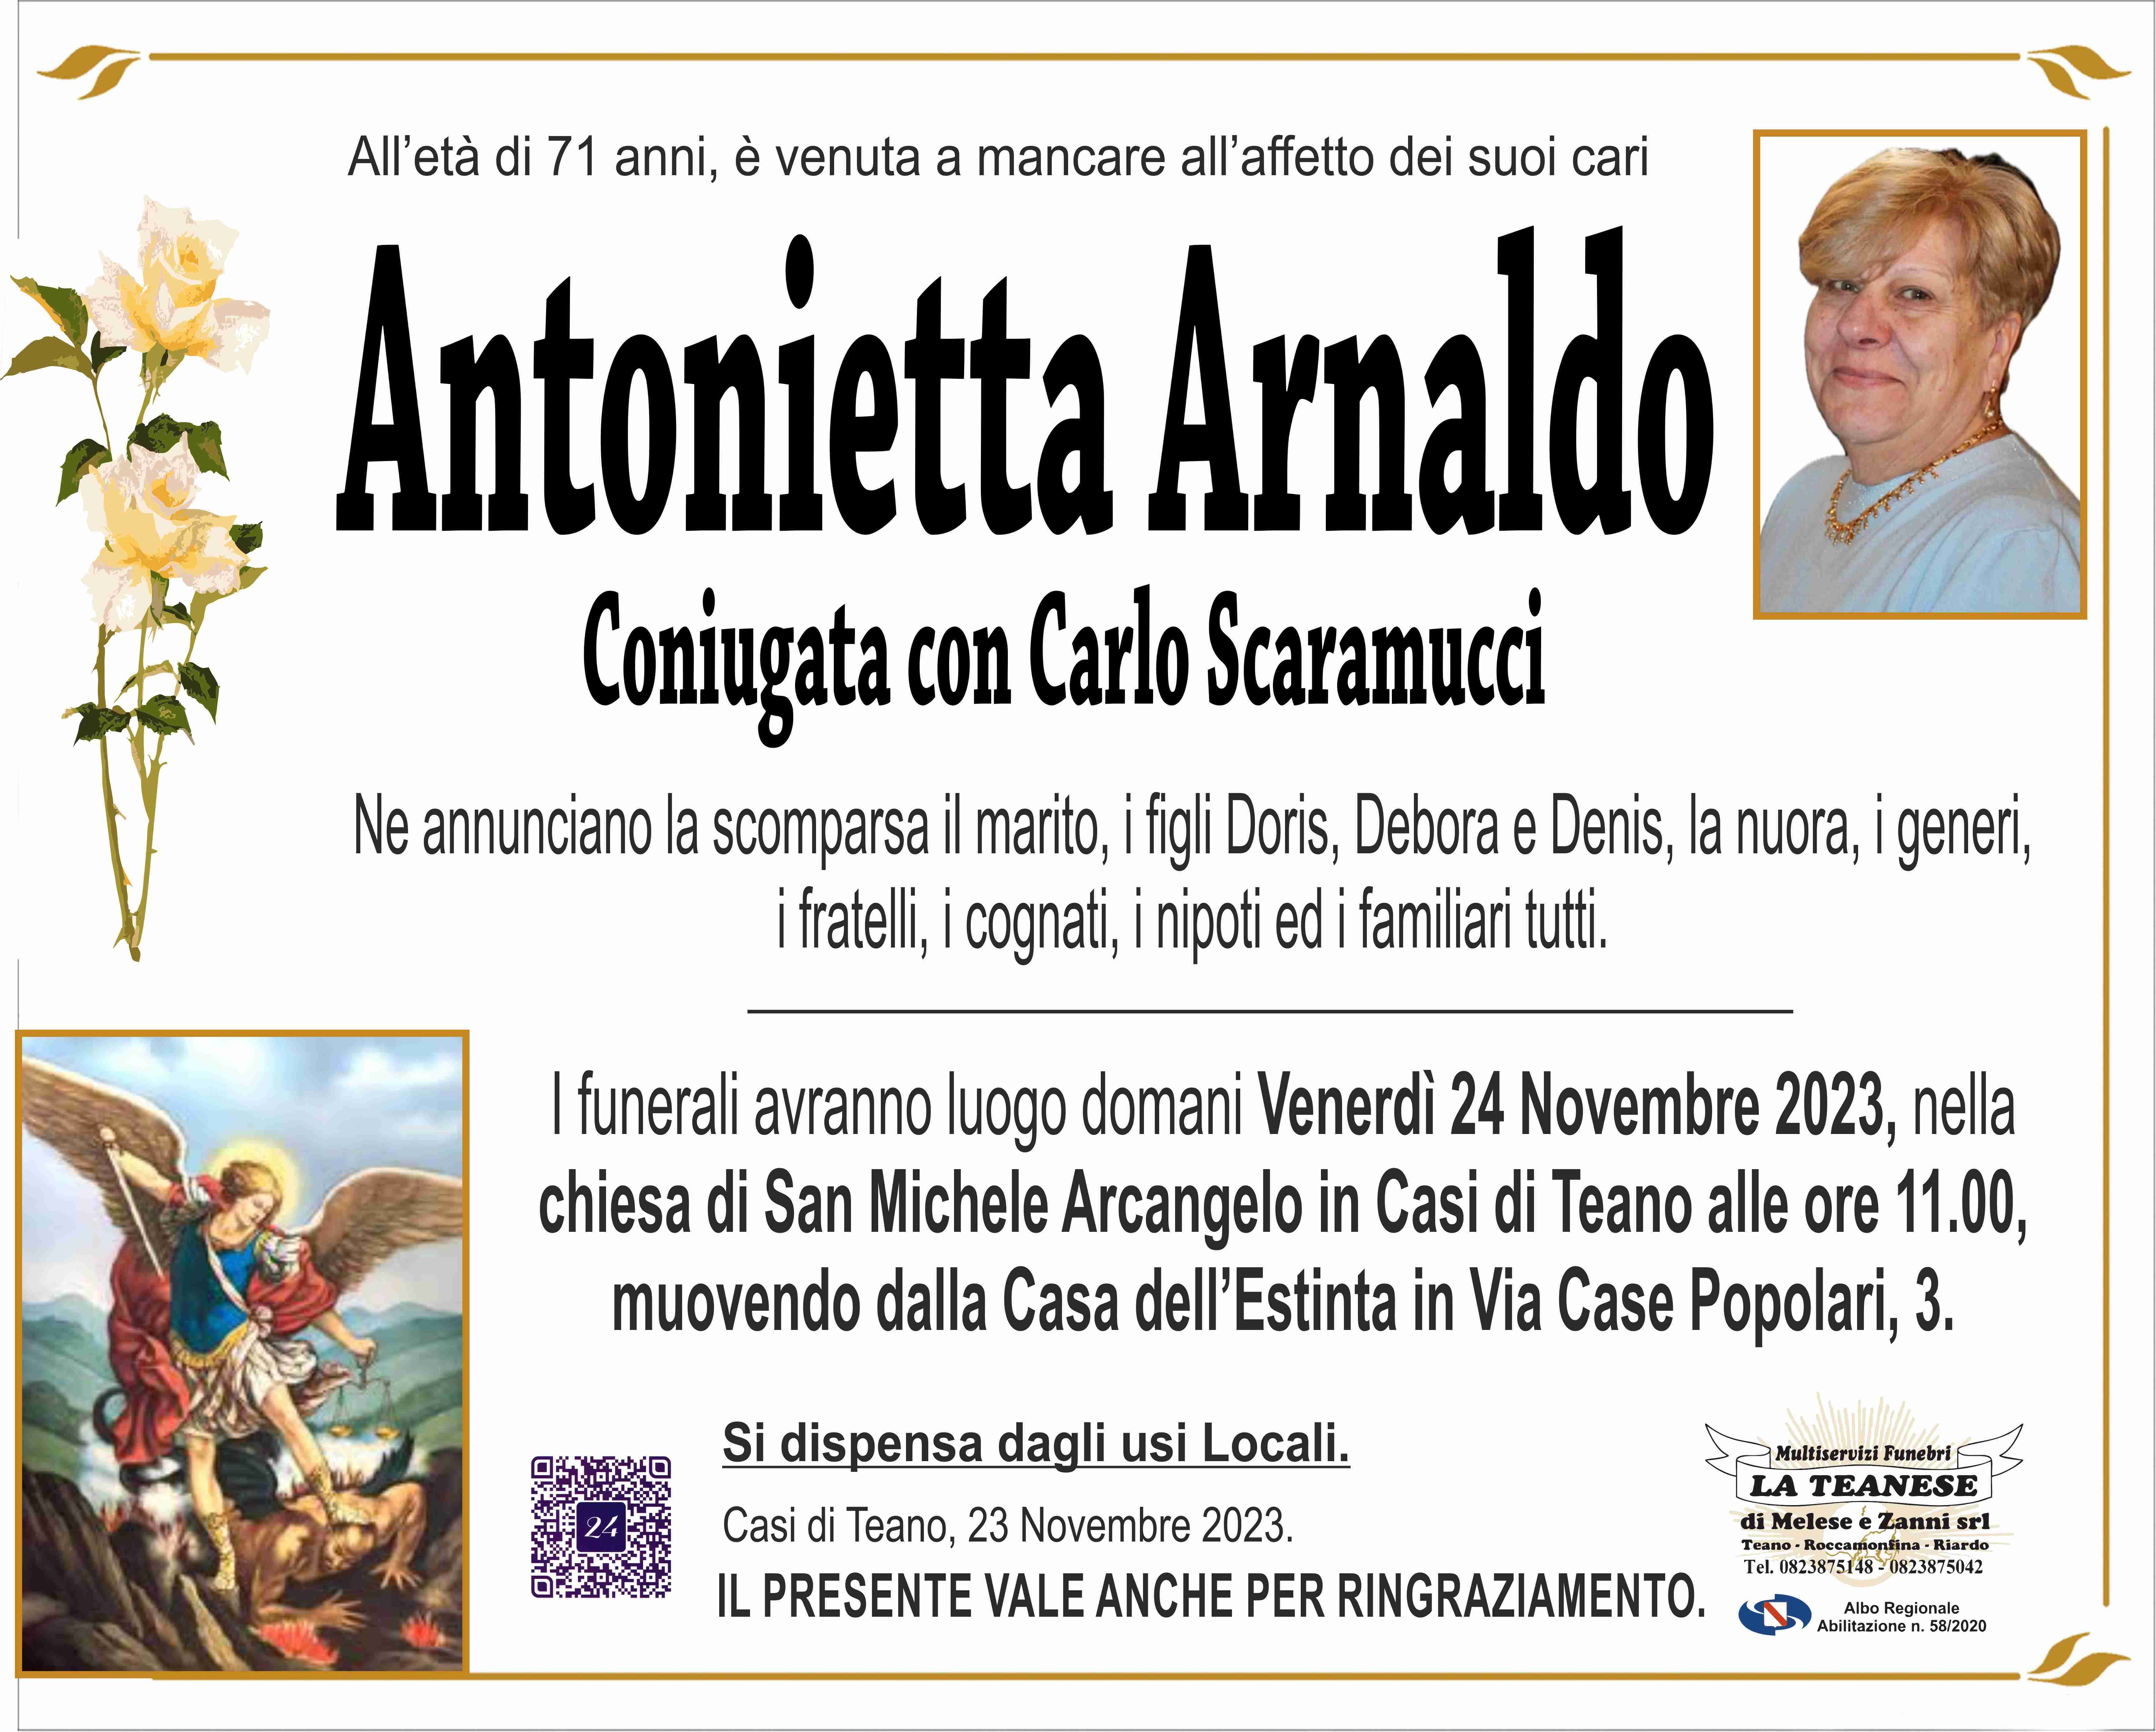 Antonietta Arnaldo